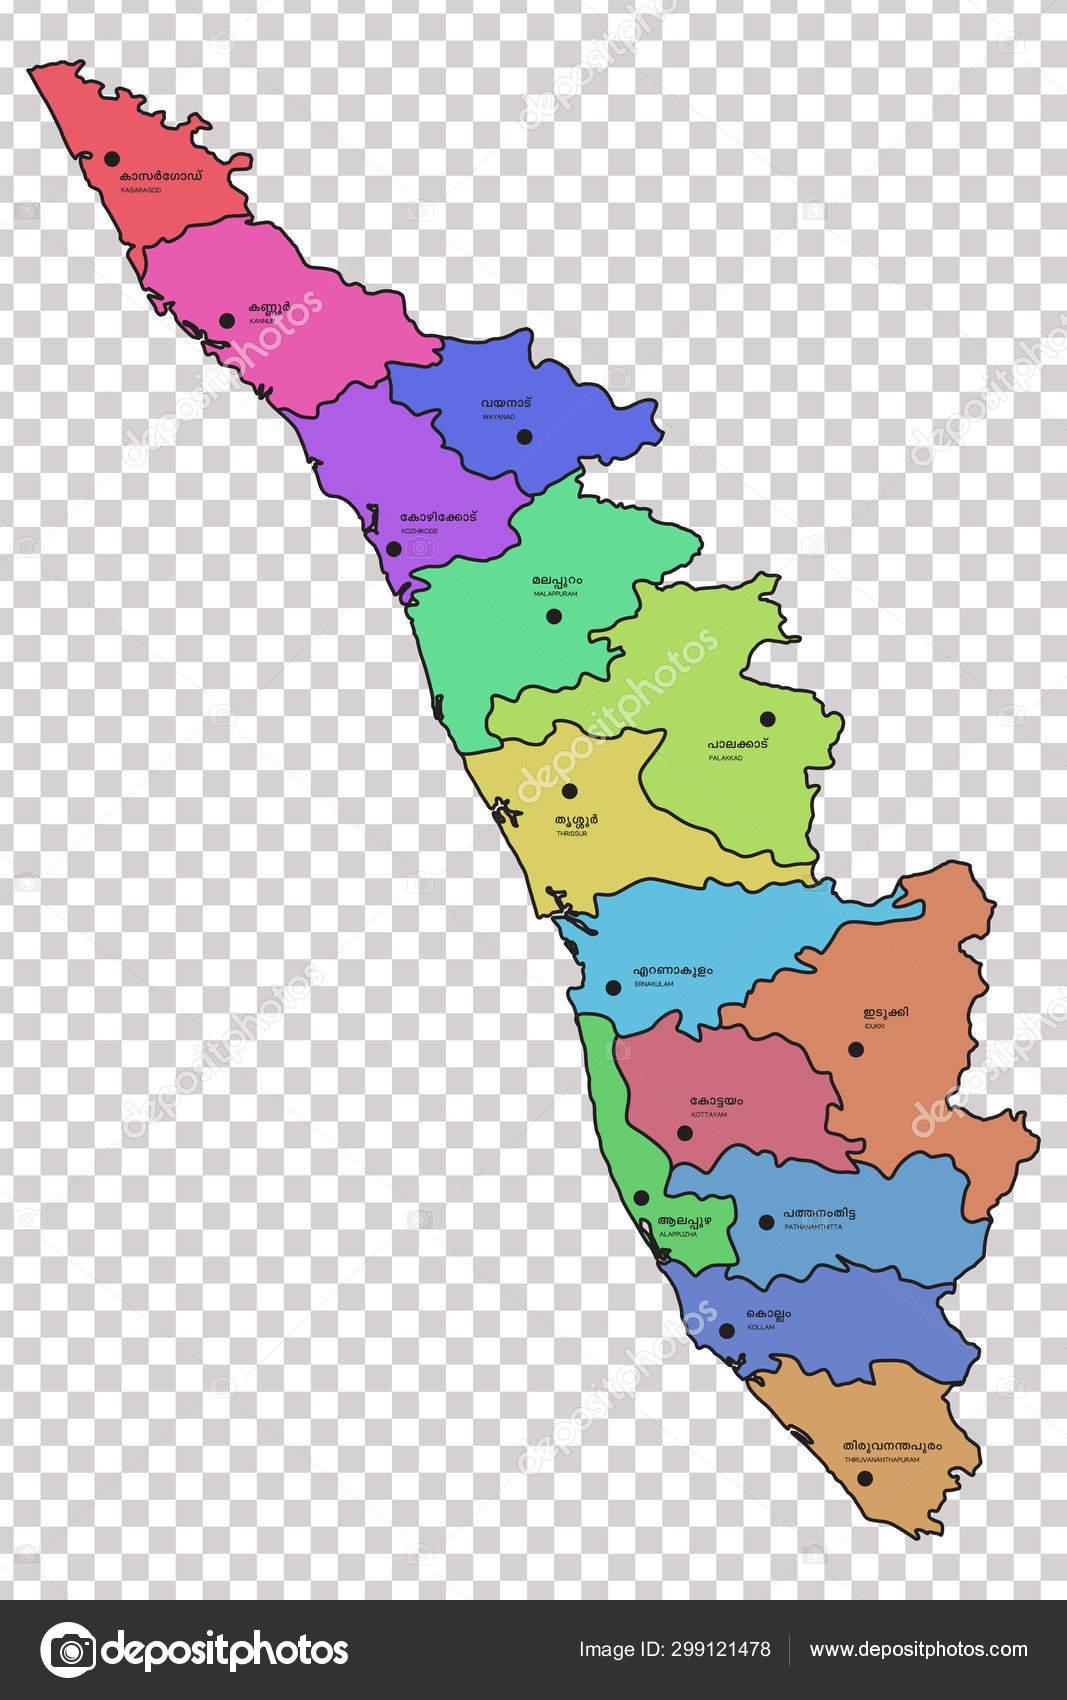 29 Kerala Map Vector Images Free Royalty Free Kerala Map Vectors Depositphotos